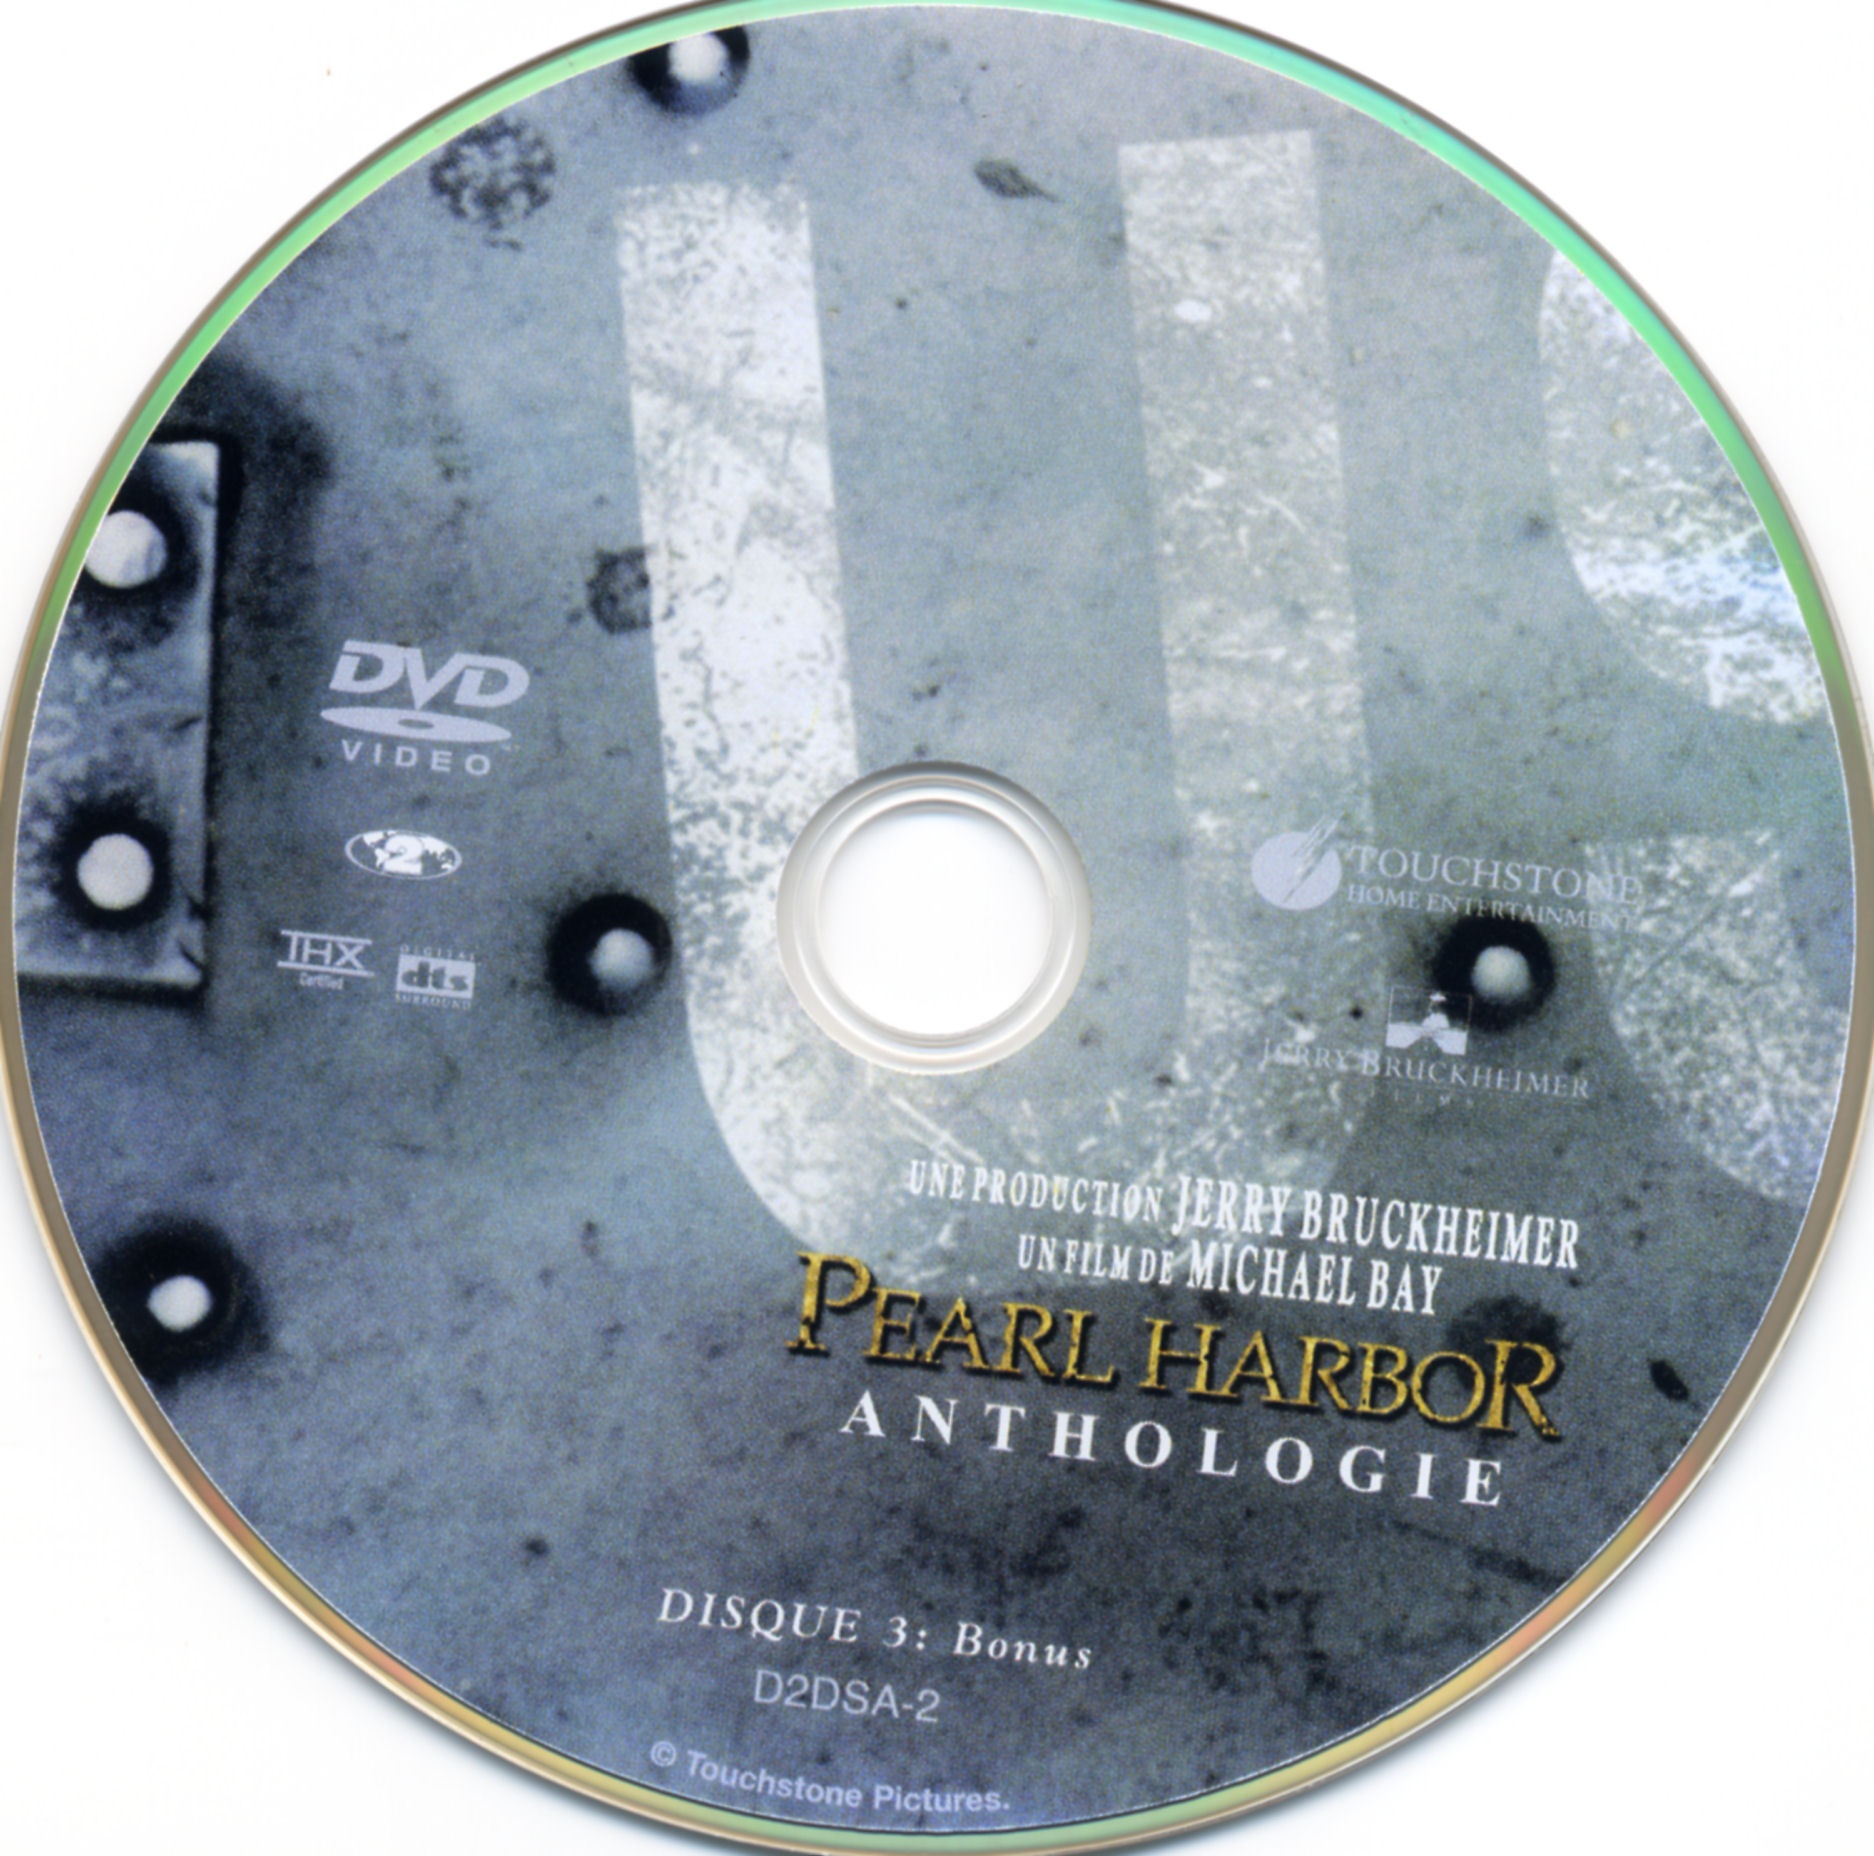 Pearl Harbor Anthologie DISC 3